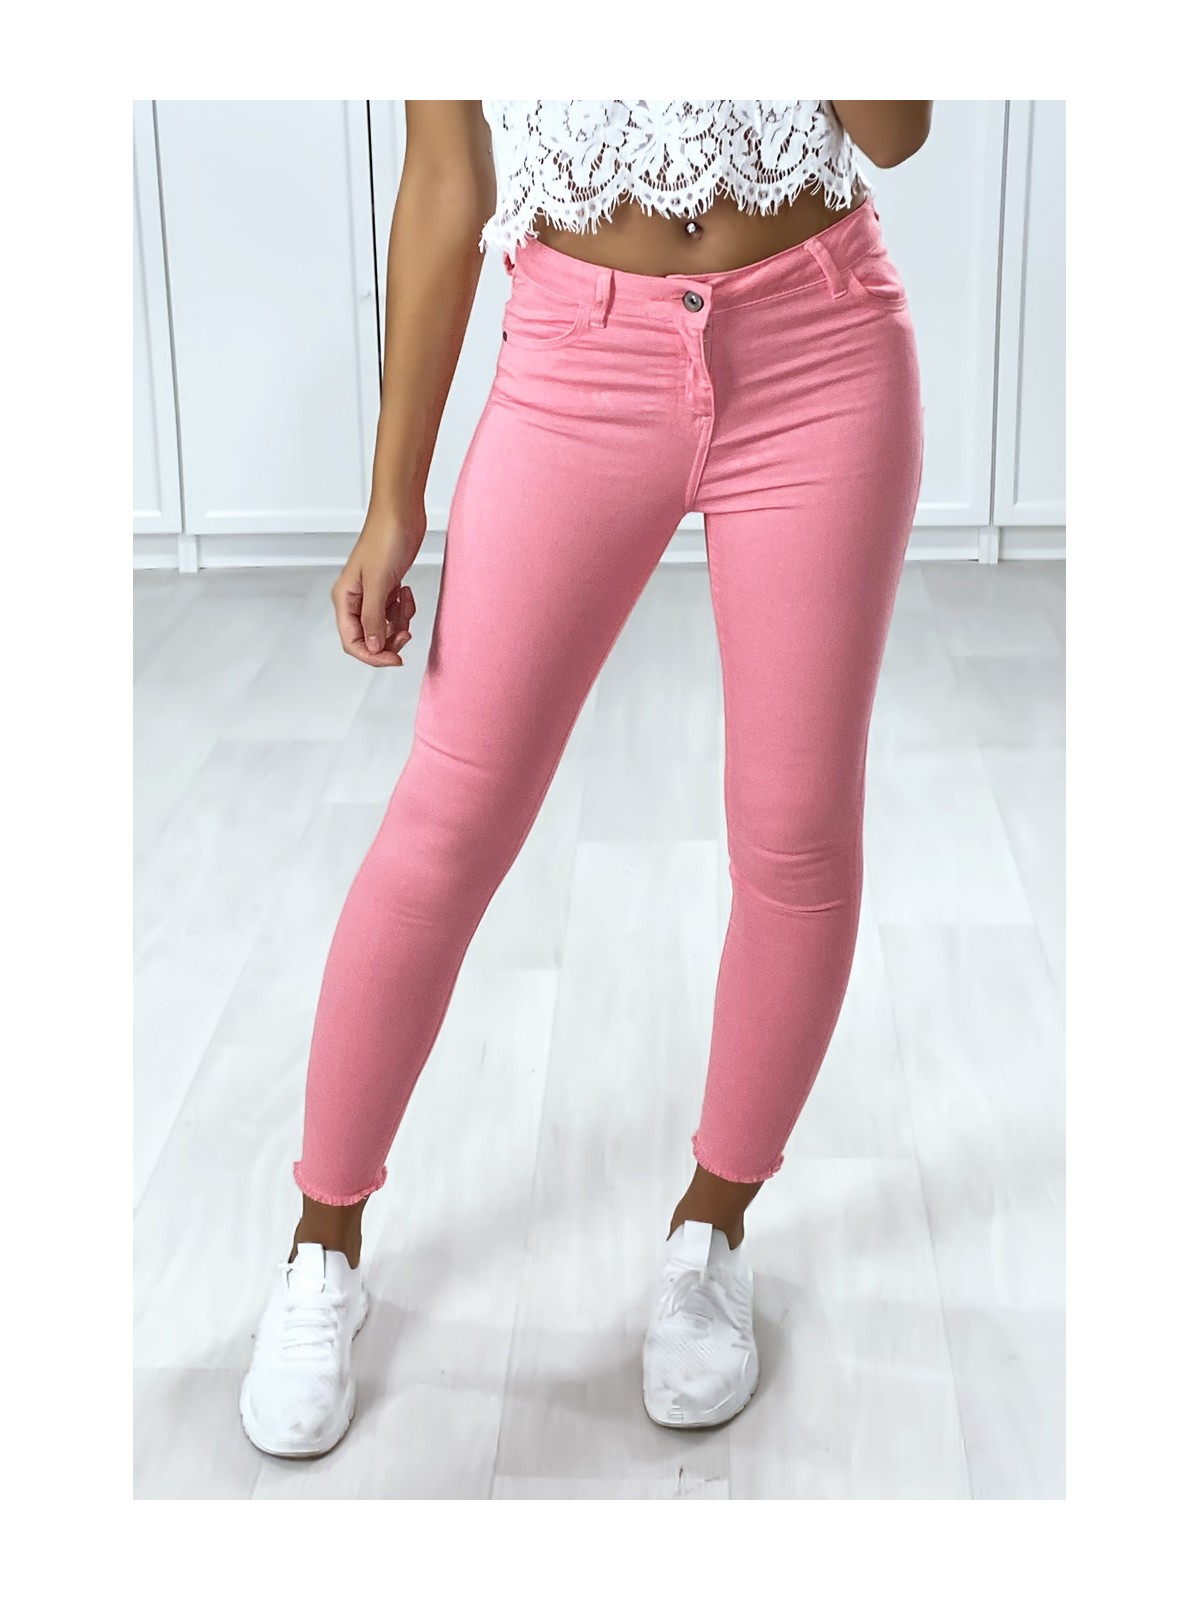 Jeans slim rose avec poches - 1